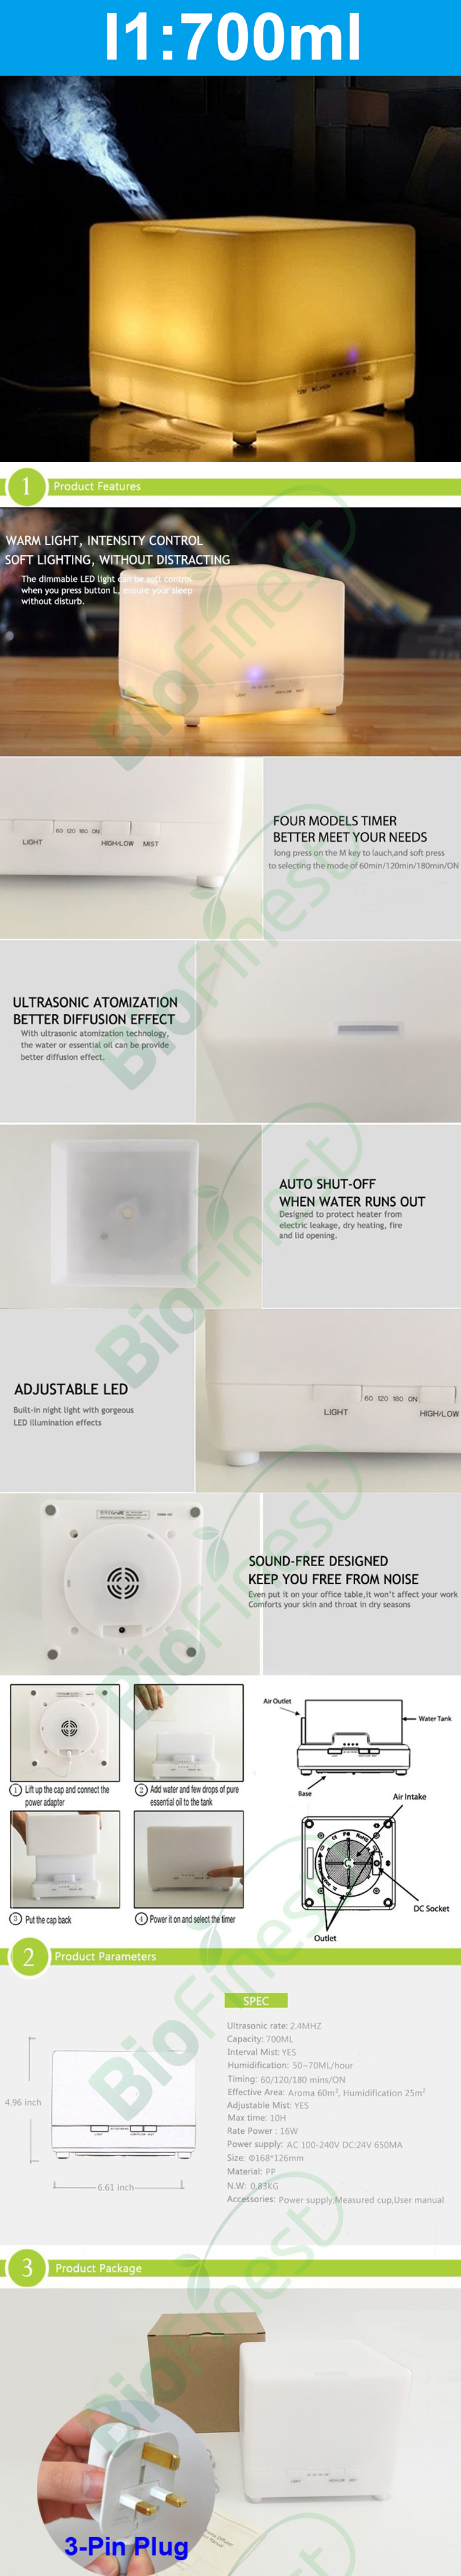 I1 (700ml) Ultrasonic Aroma Diffuser/ Air Humidifier/ 7-Color LED